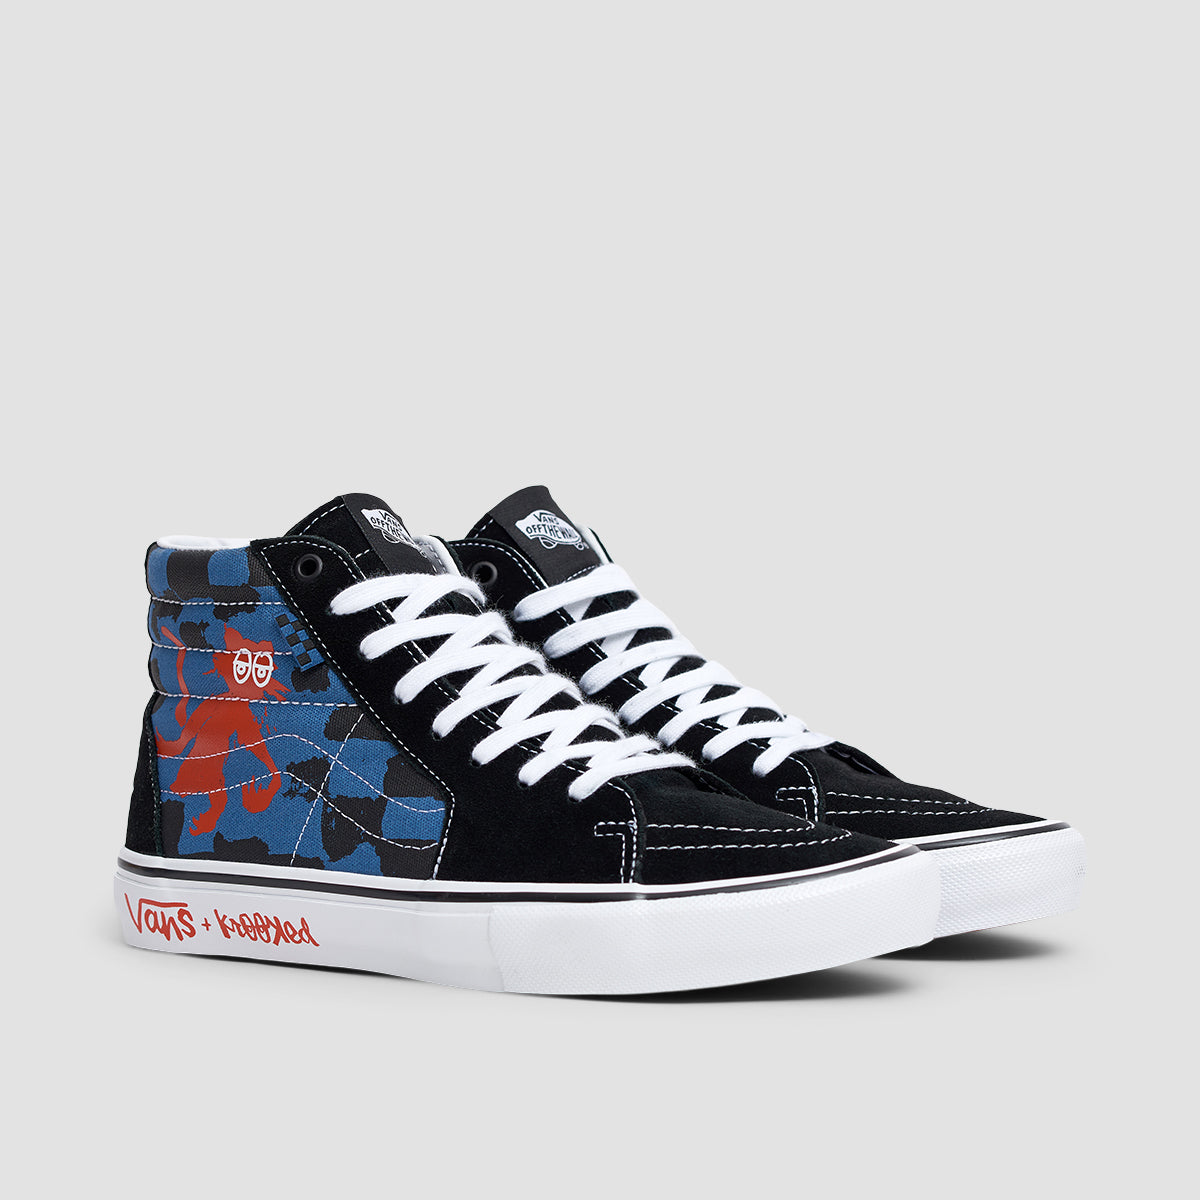 Vans Skate Sk8-Hi Shoes - Krooked By Natas For Ray Blue/Black/Multicolour